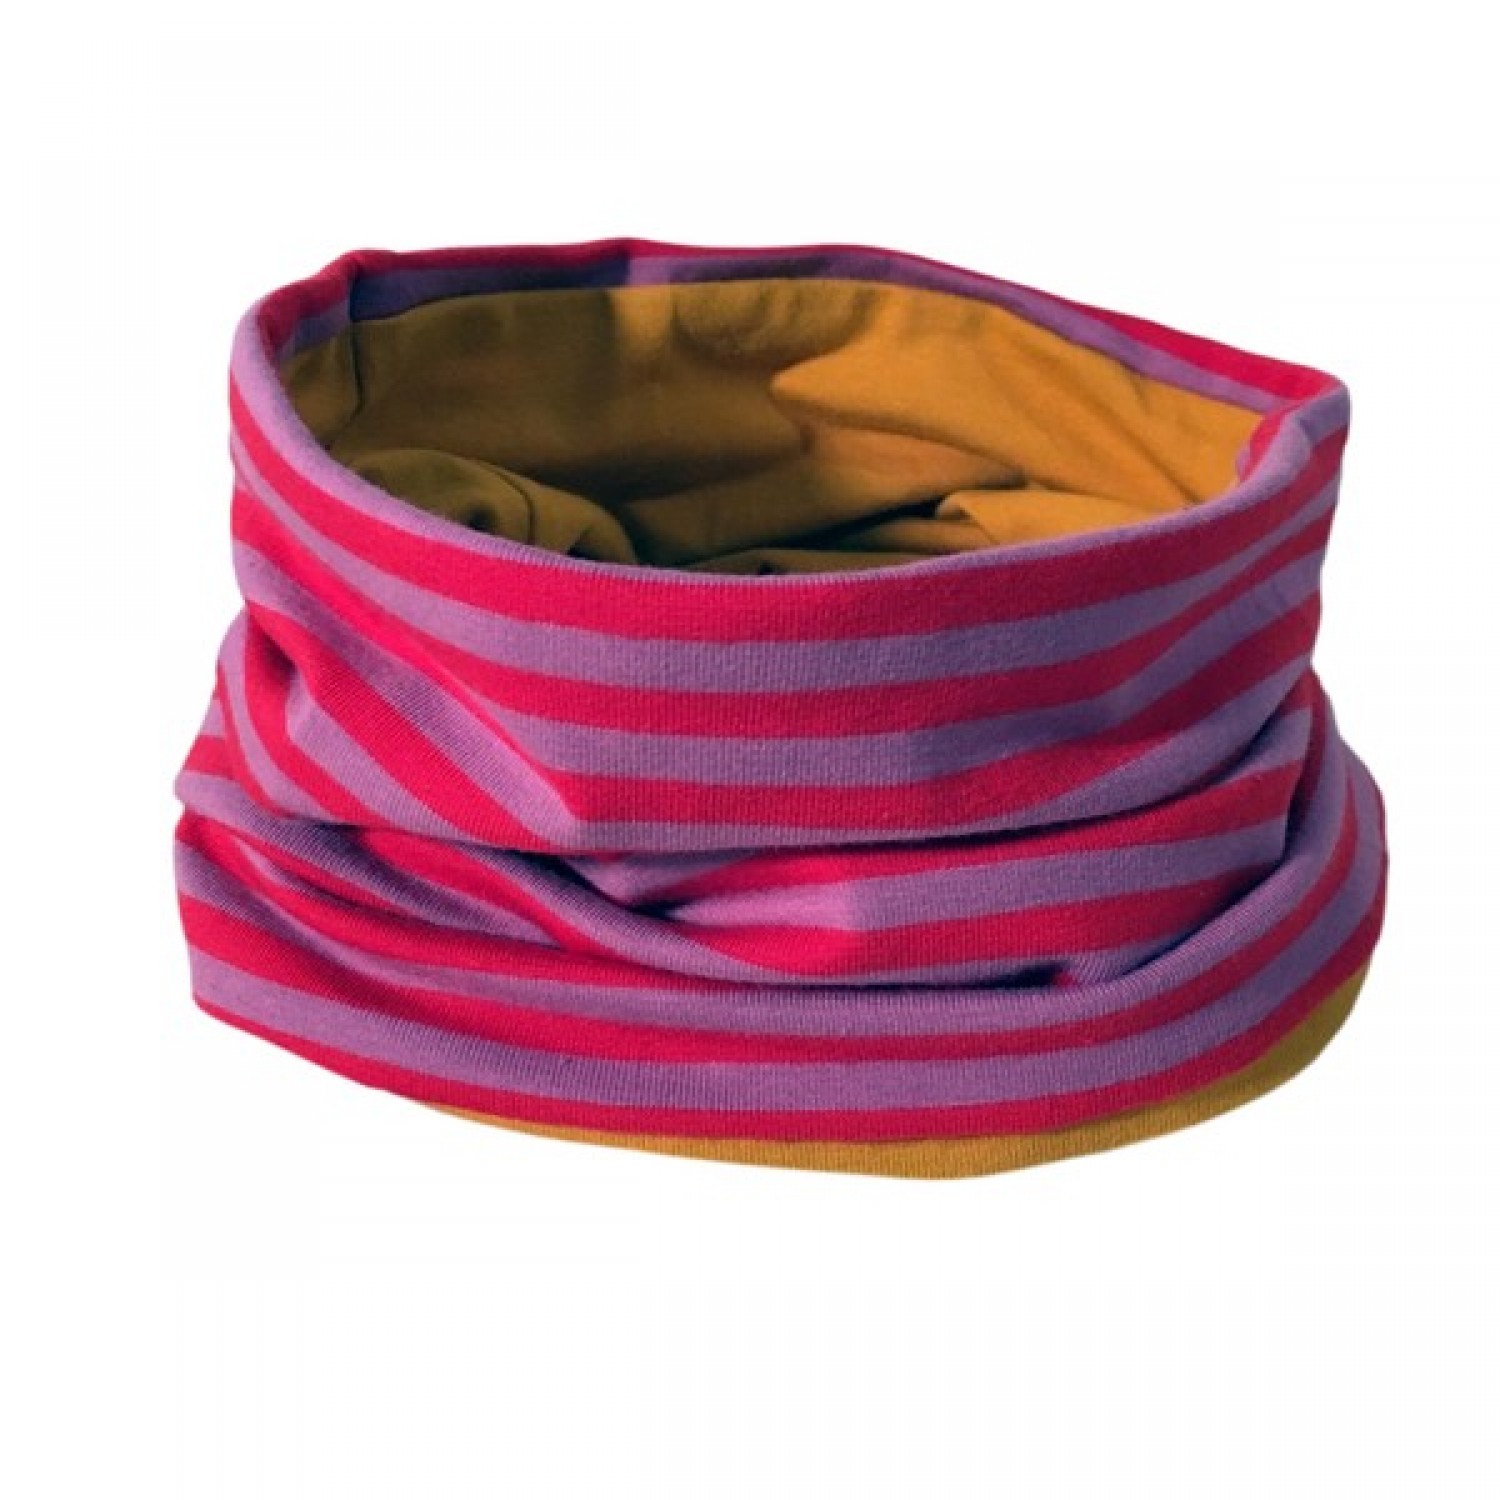 Loop scarf Lilac-red striped/Mustard Yellow | bingabonga